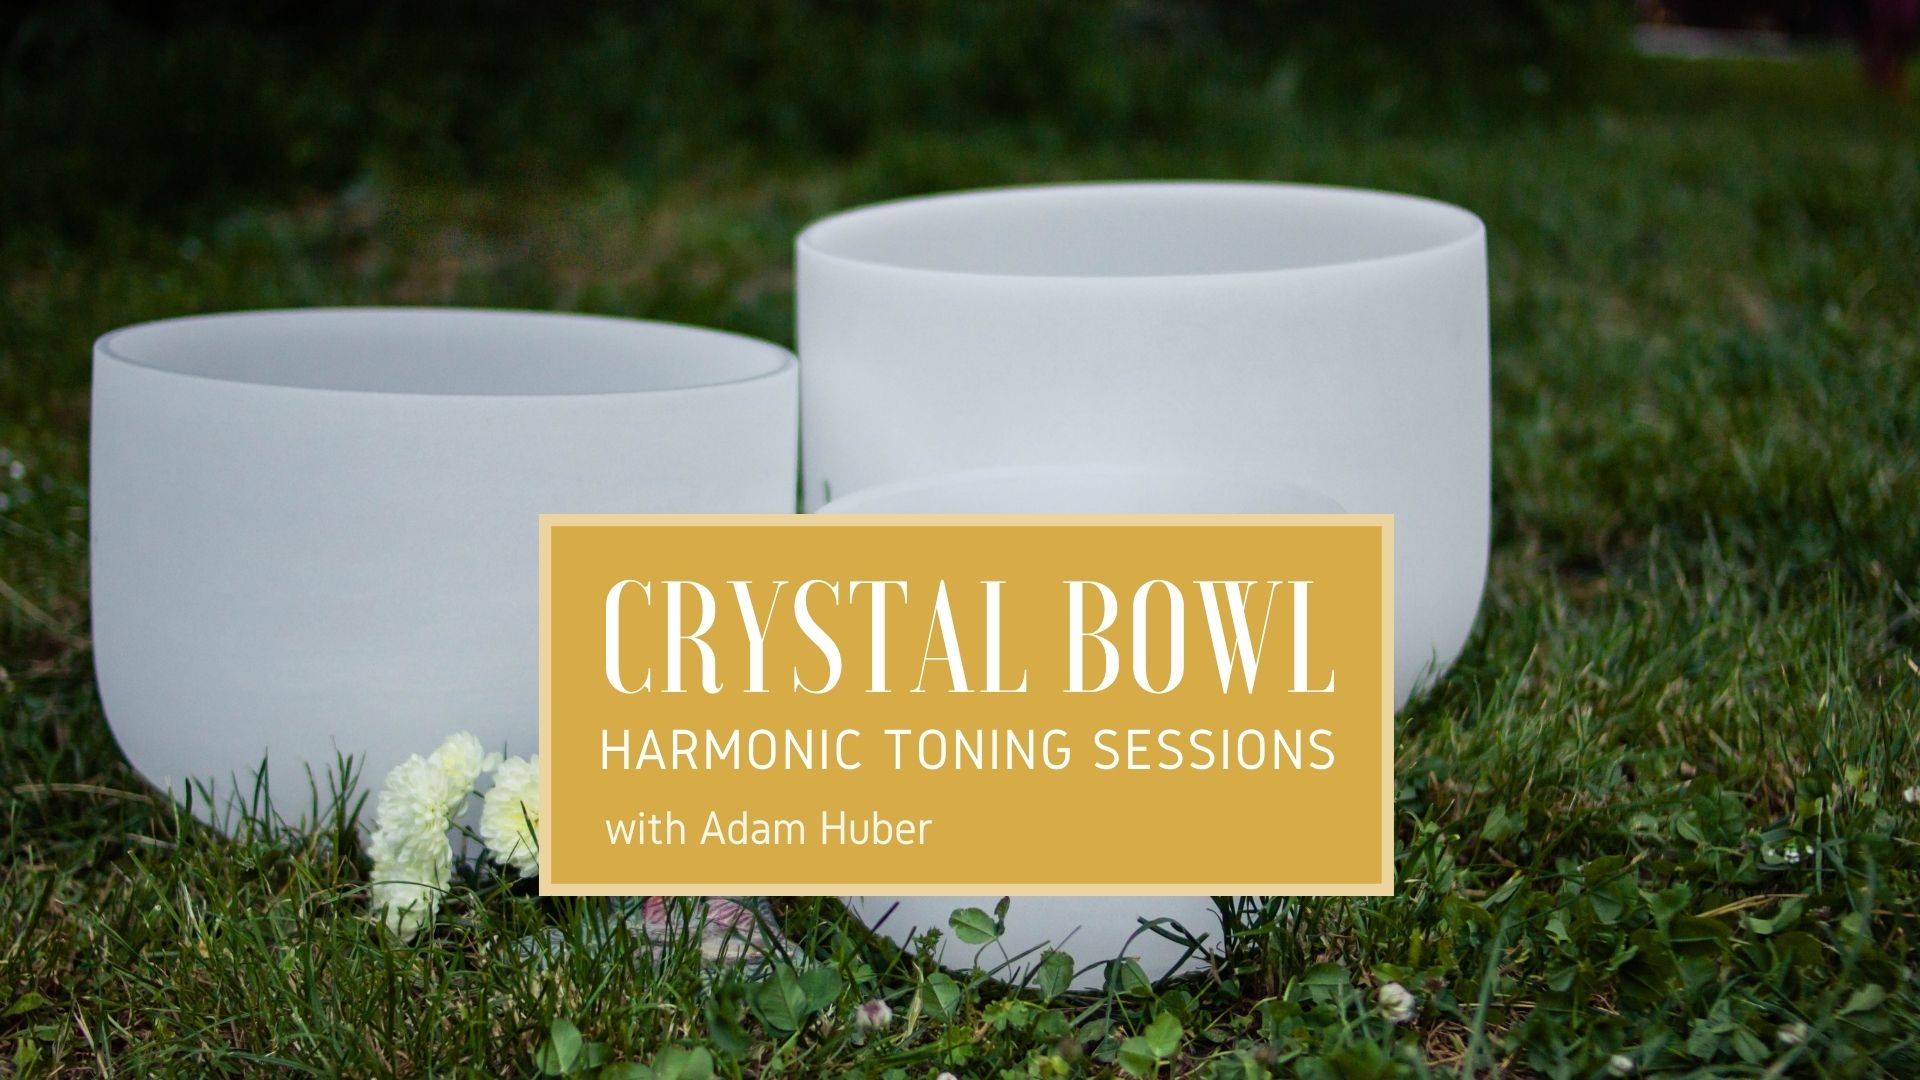 Crystal Bowl/Harmonic Toning Sessions